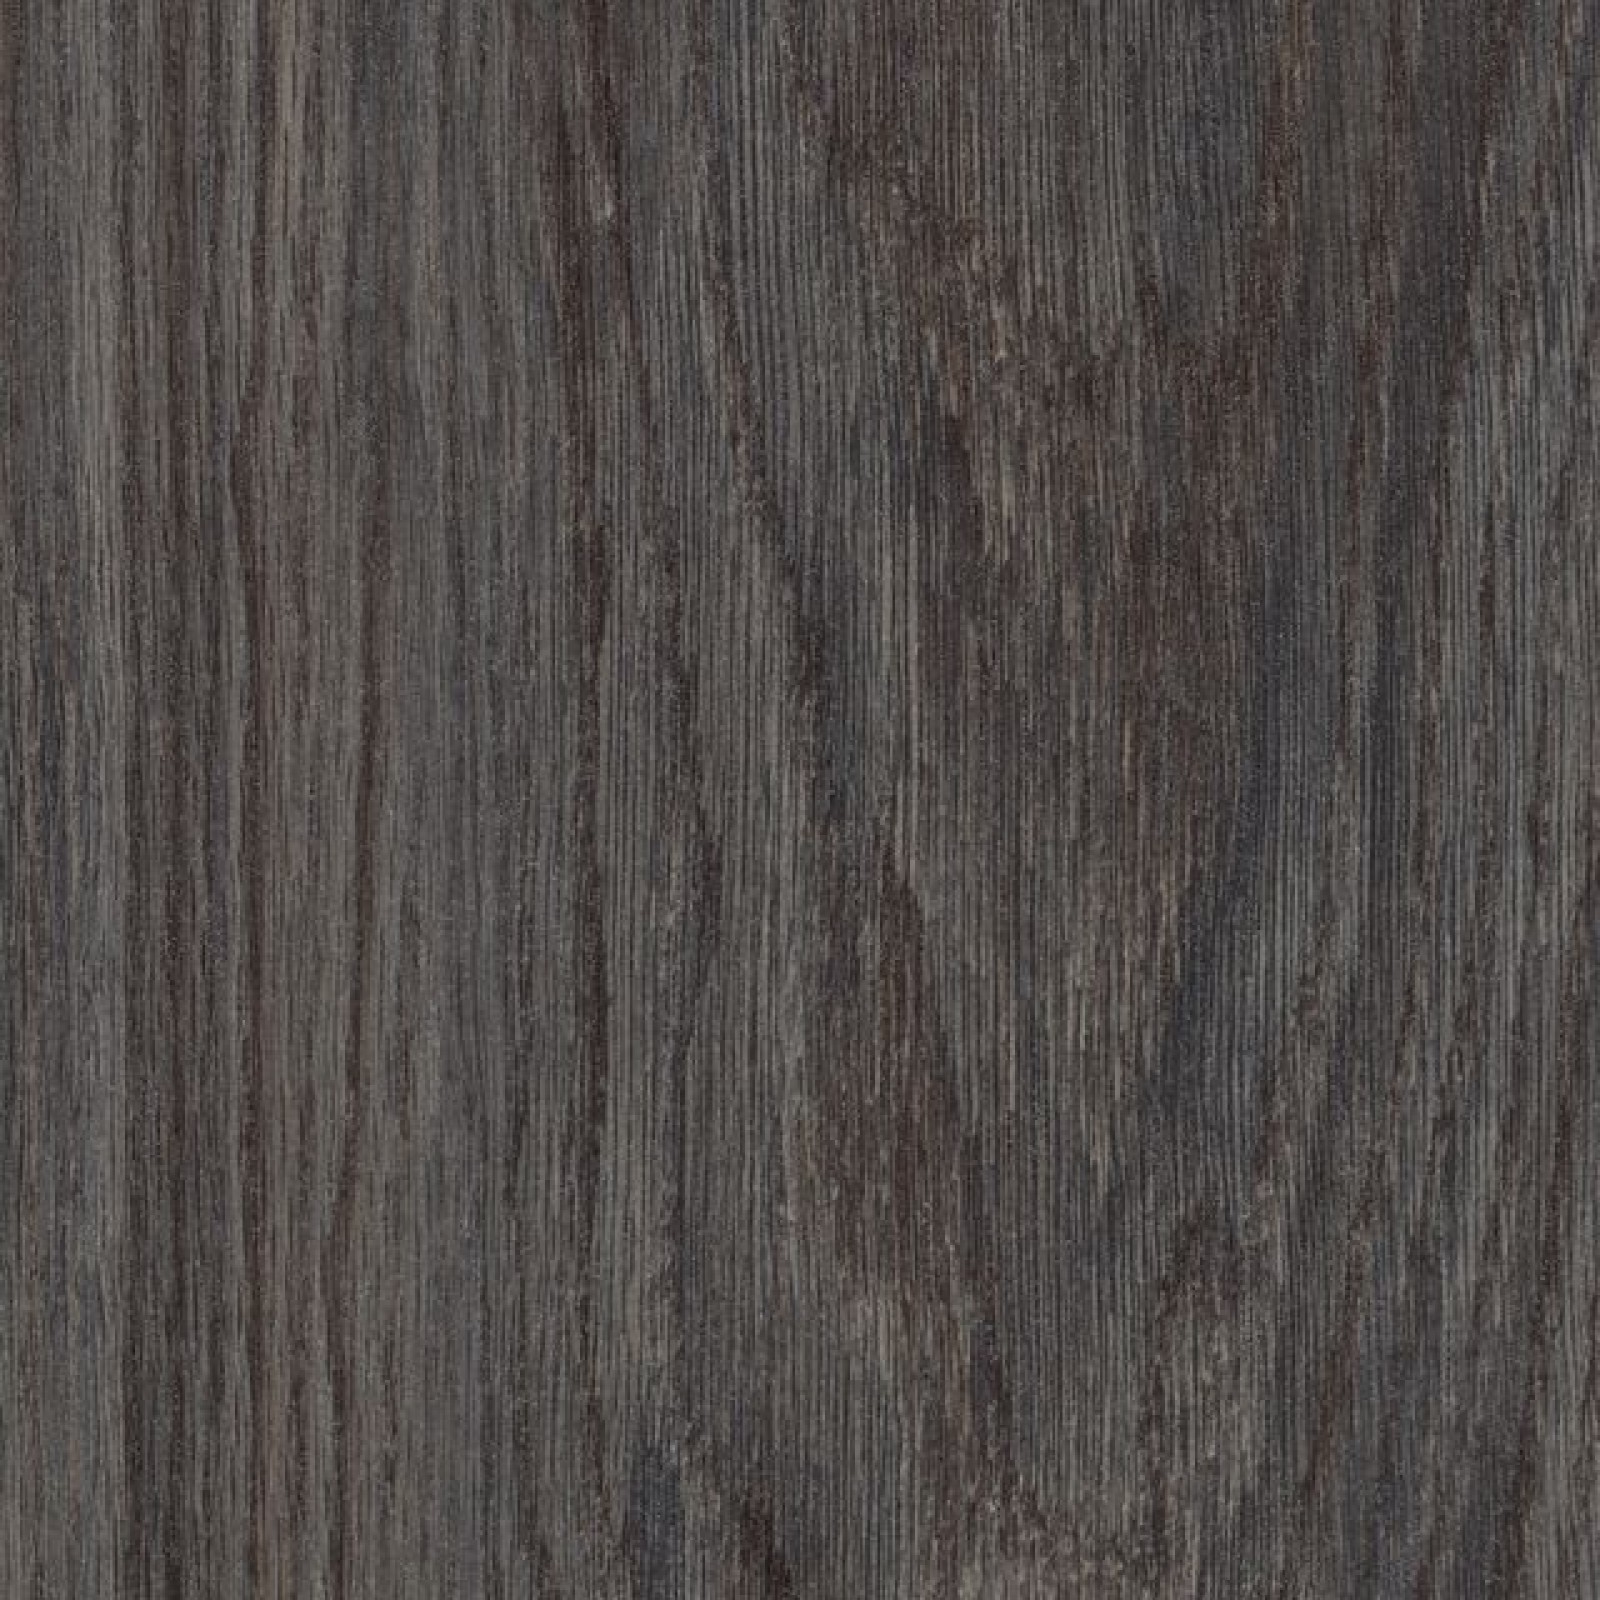 Vzor - 600185 antrhacite weathered oak